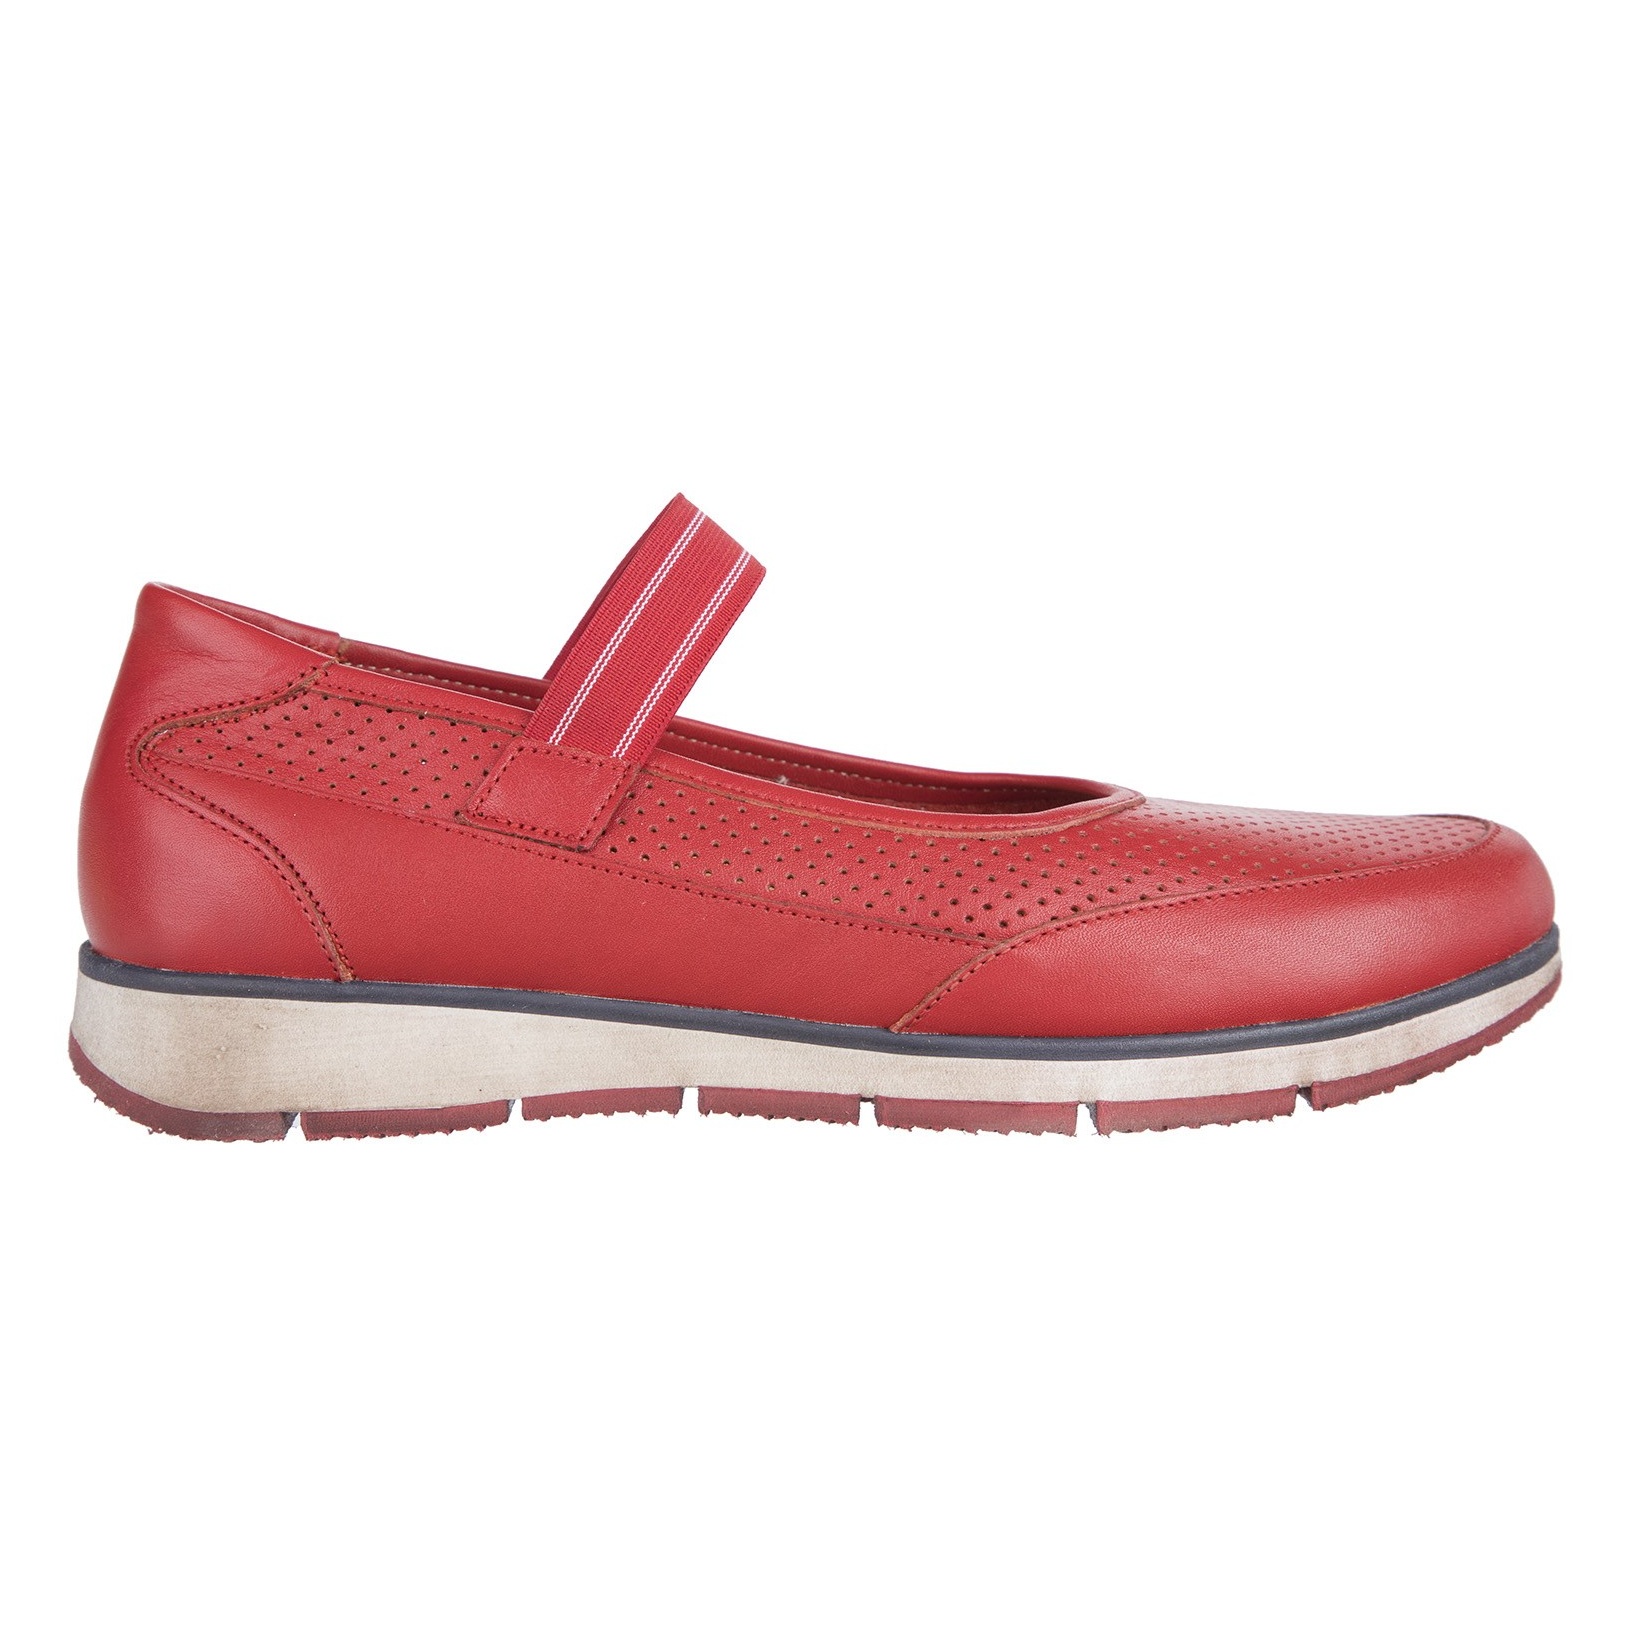 کفش تخت چرم زنانه - برتونیکس - قرمز - 1